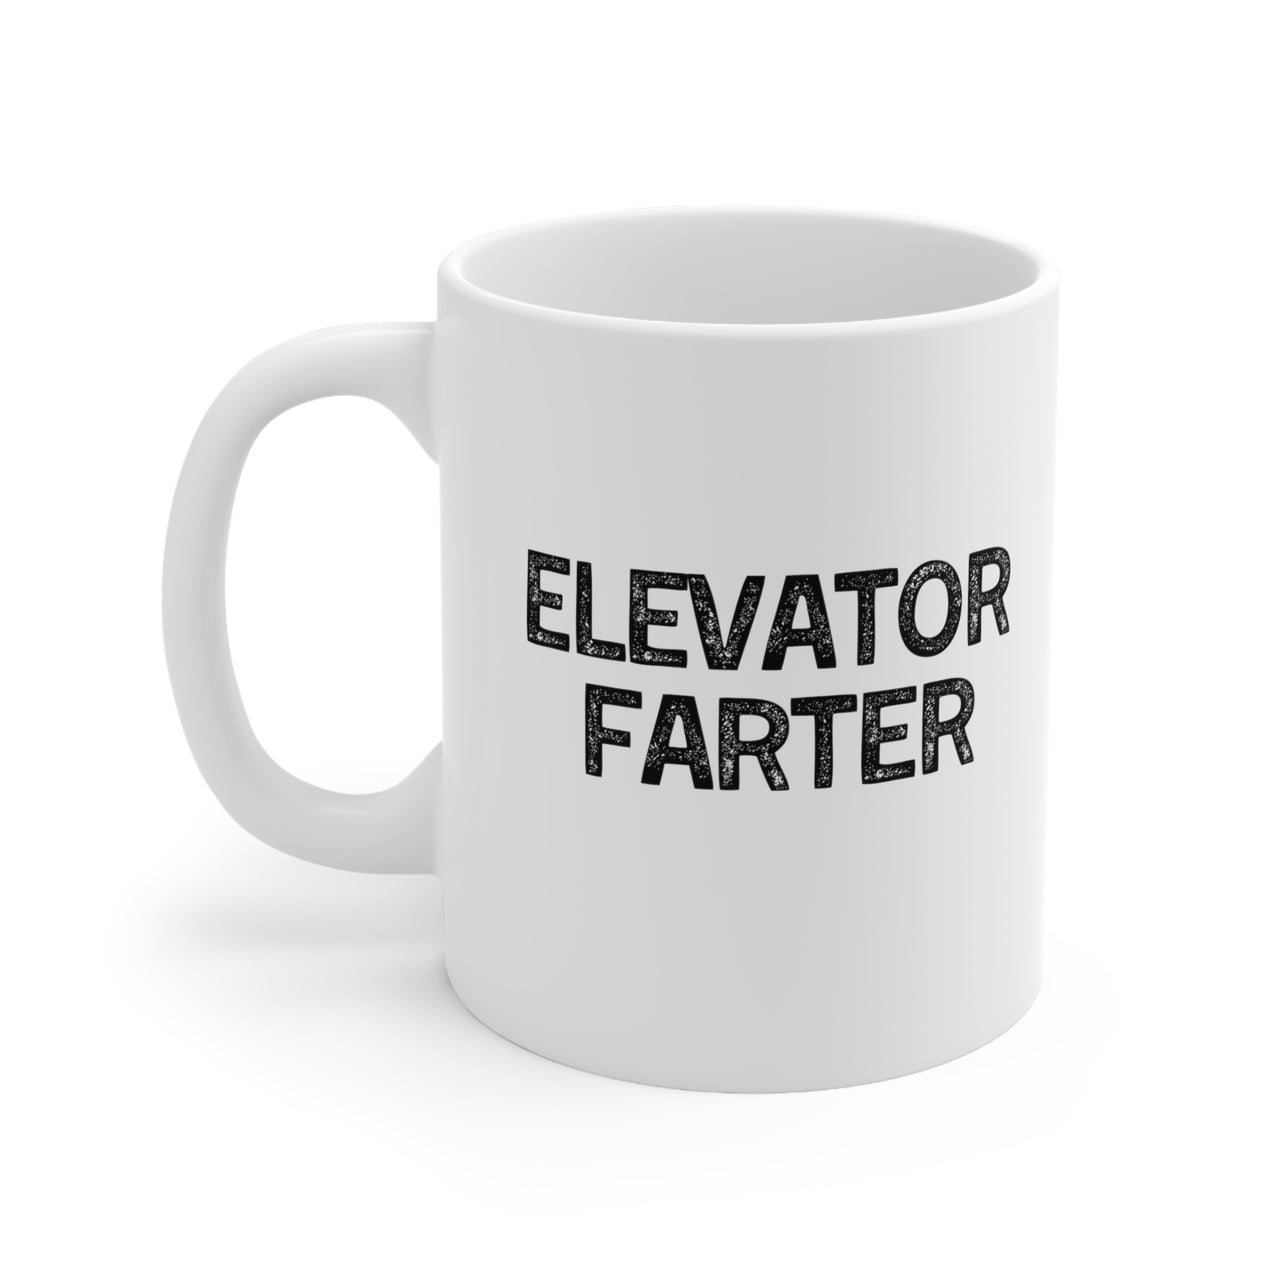 ELEVATOR FARTER Ceramic Mug 11oz